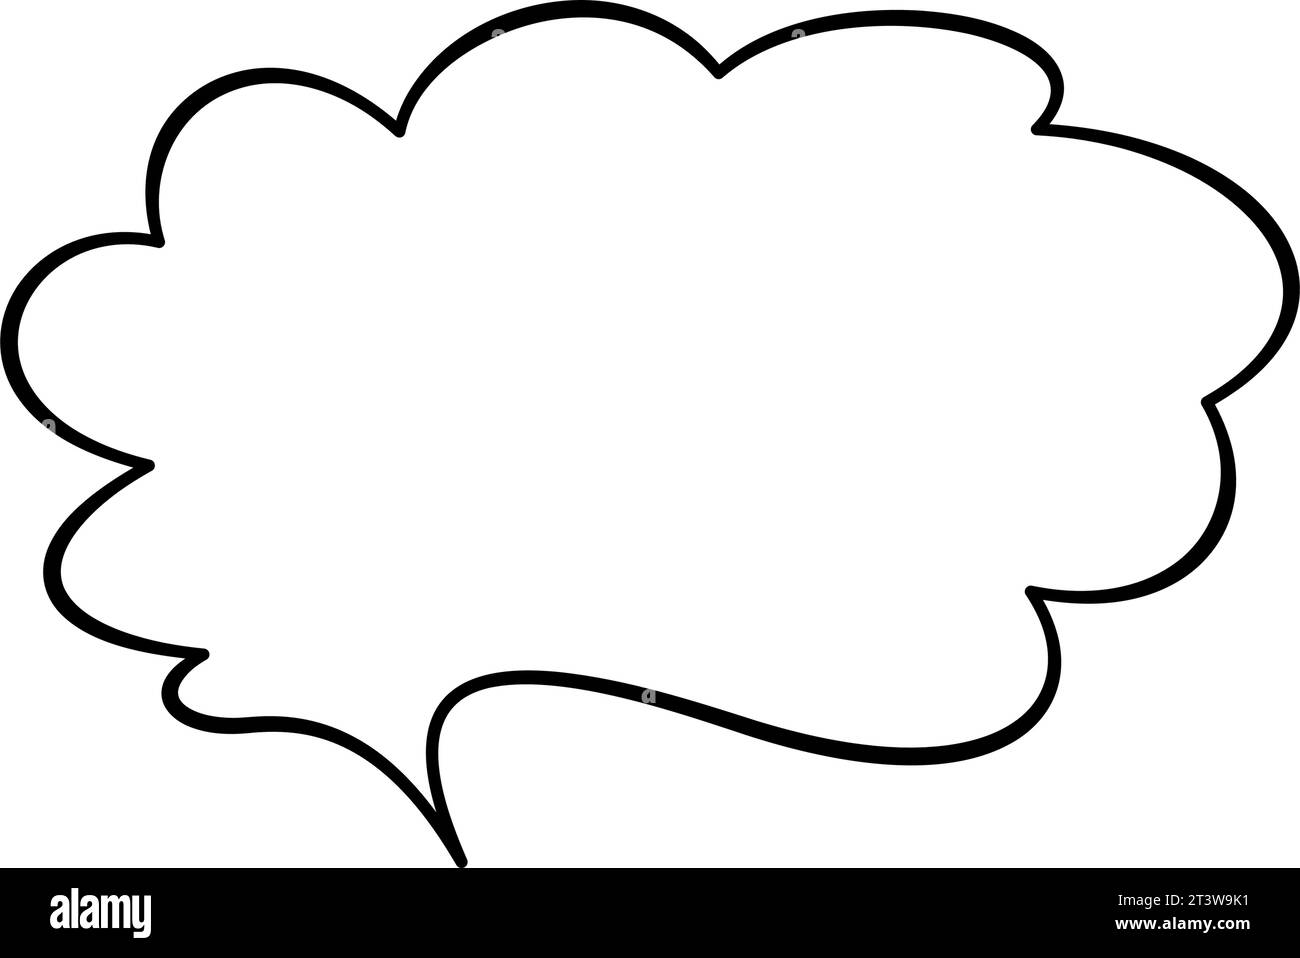 Manga speech bubbles element. Hand drawn chat boxe. Doodle manga speech balloon. Comic cartoon text bubble frame. Vector illustration isolated on Stock Vector